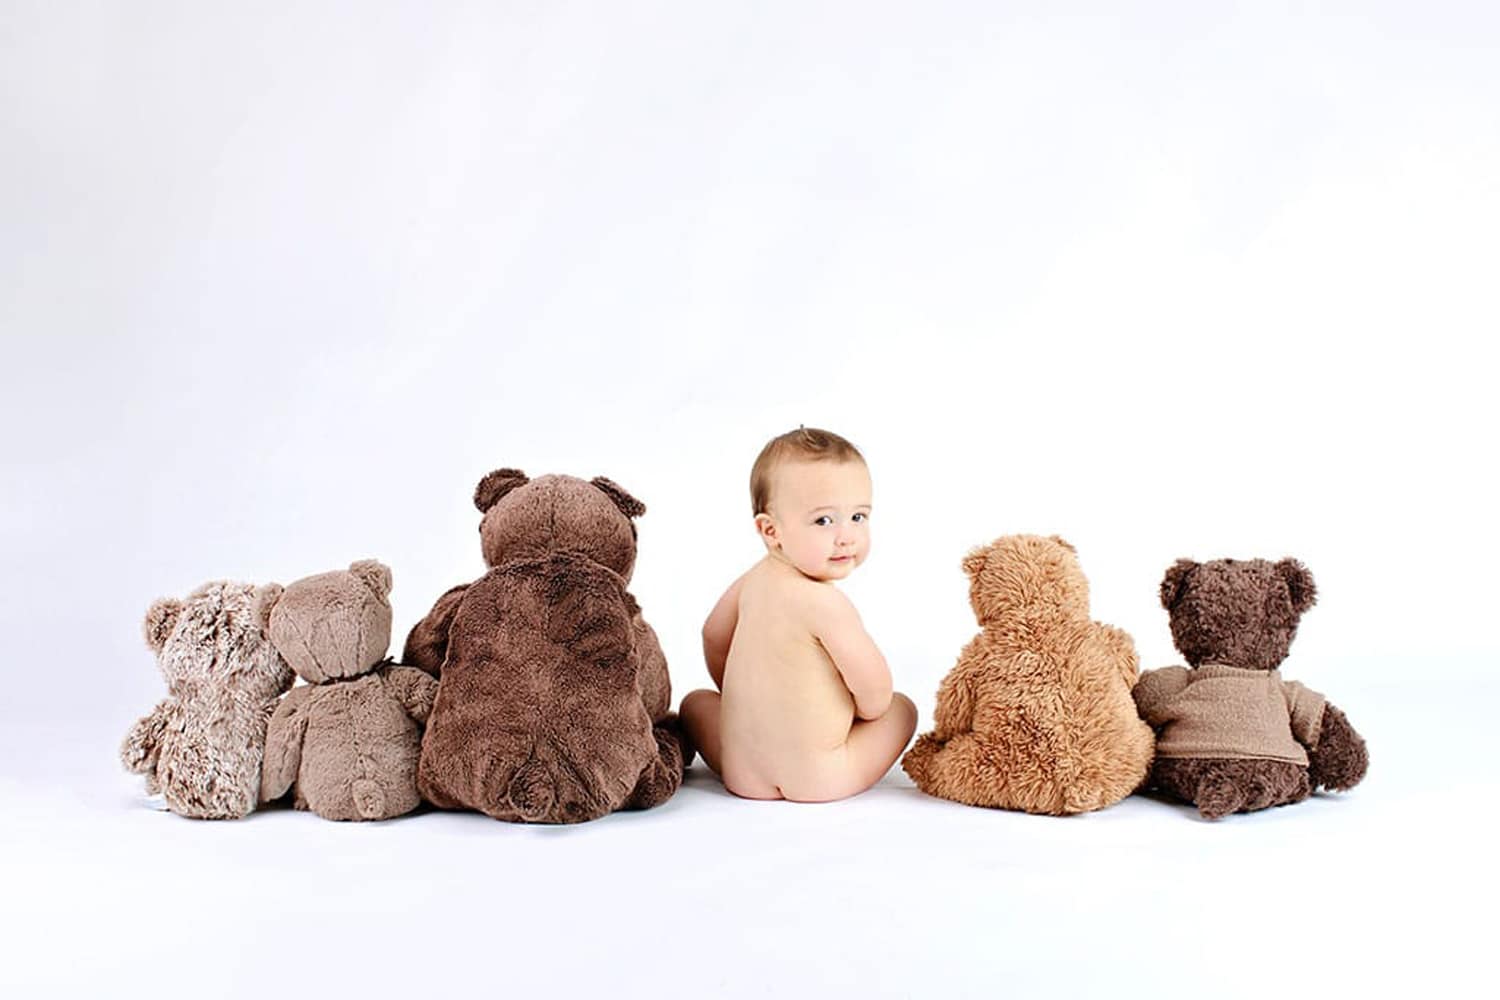 A baby looks back among stuffed teddy bears.